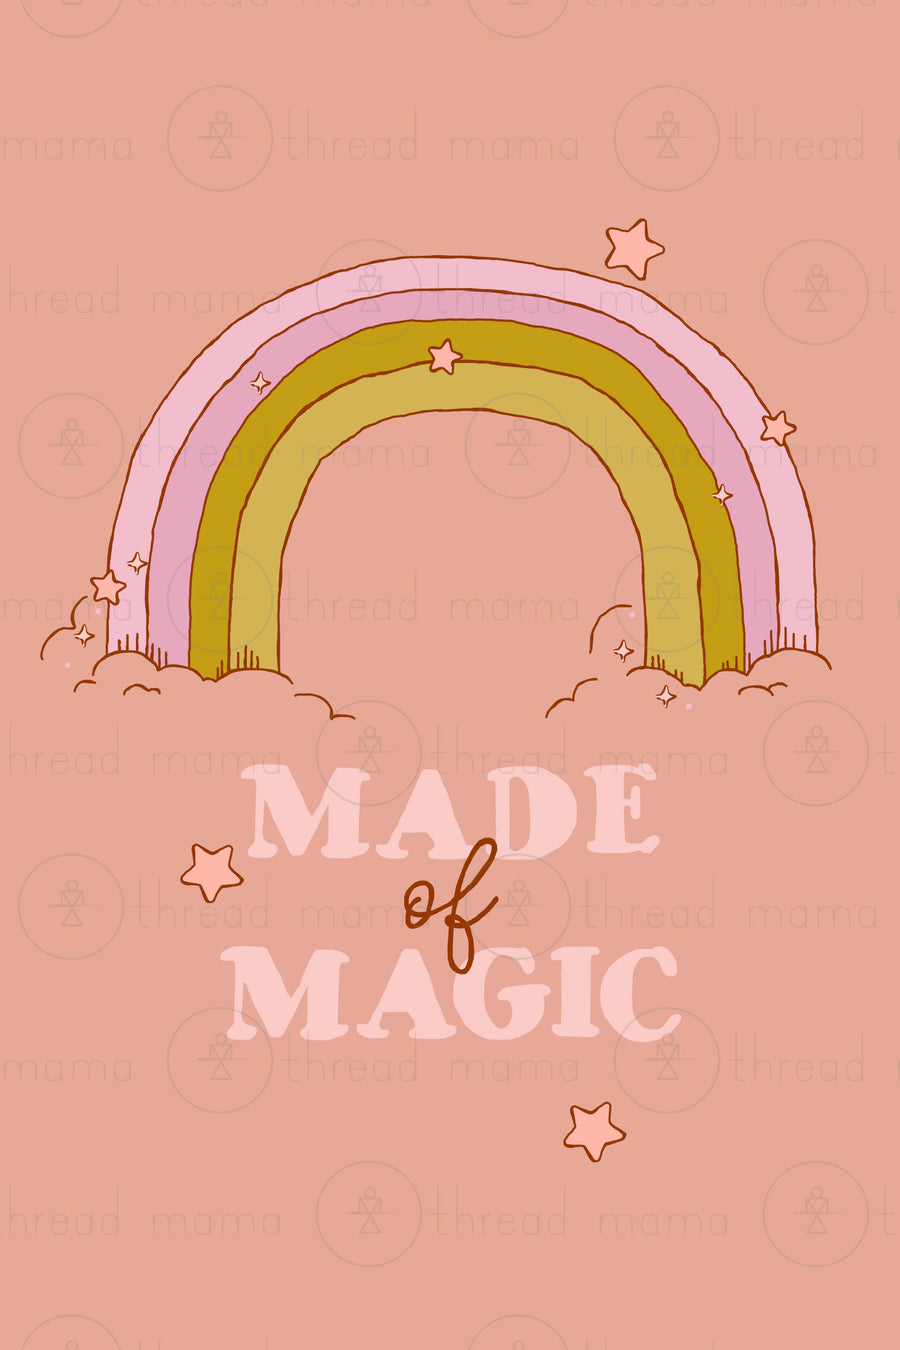 Made of Rainbow magic